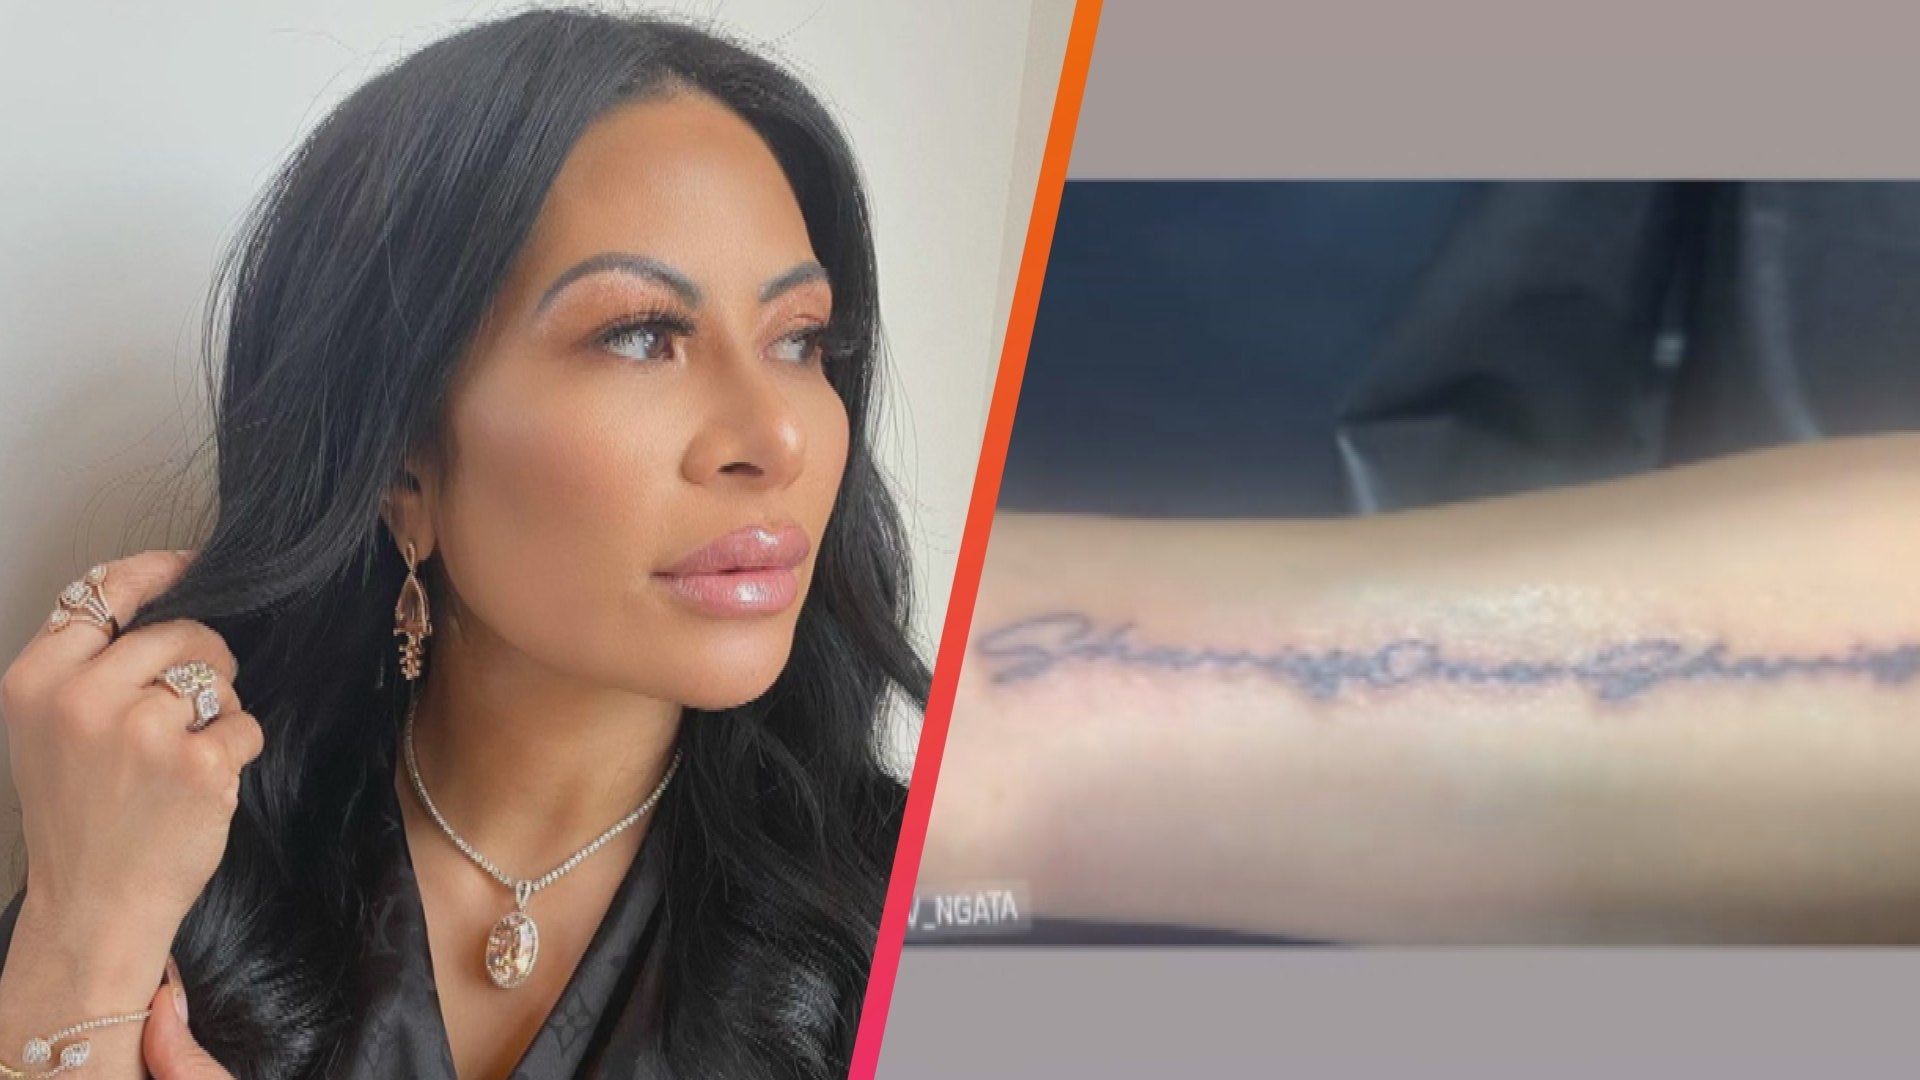 'RHOSLC' Star Jen Shah Gets Tattoo Honoring Her Husband and Children Ahead of Prison Sentence 